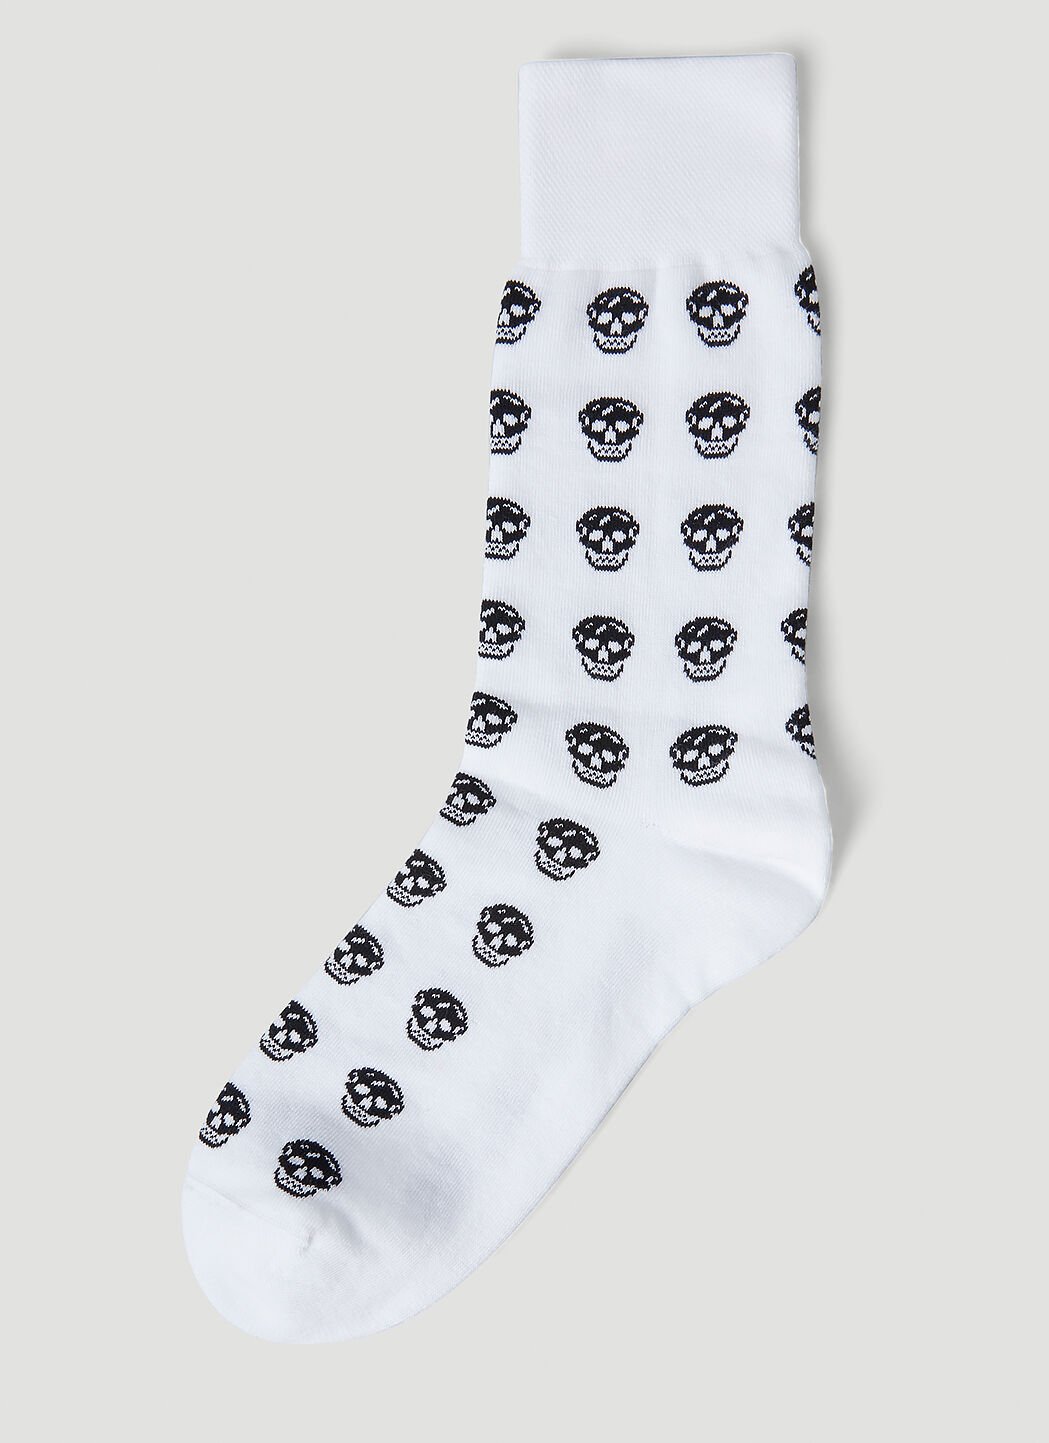 Alexander McQueen Skull Motif Socks White amq0148033